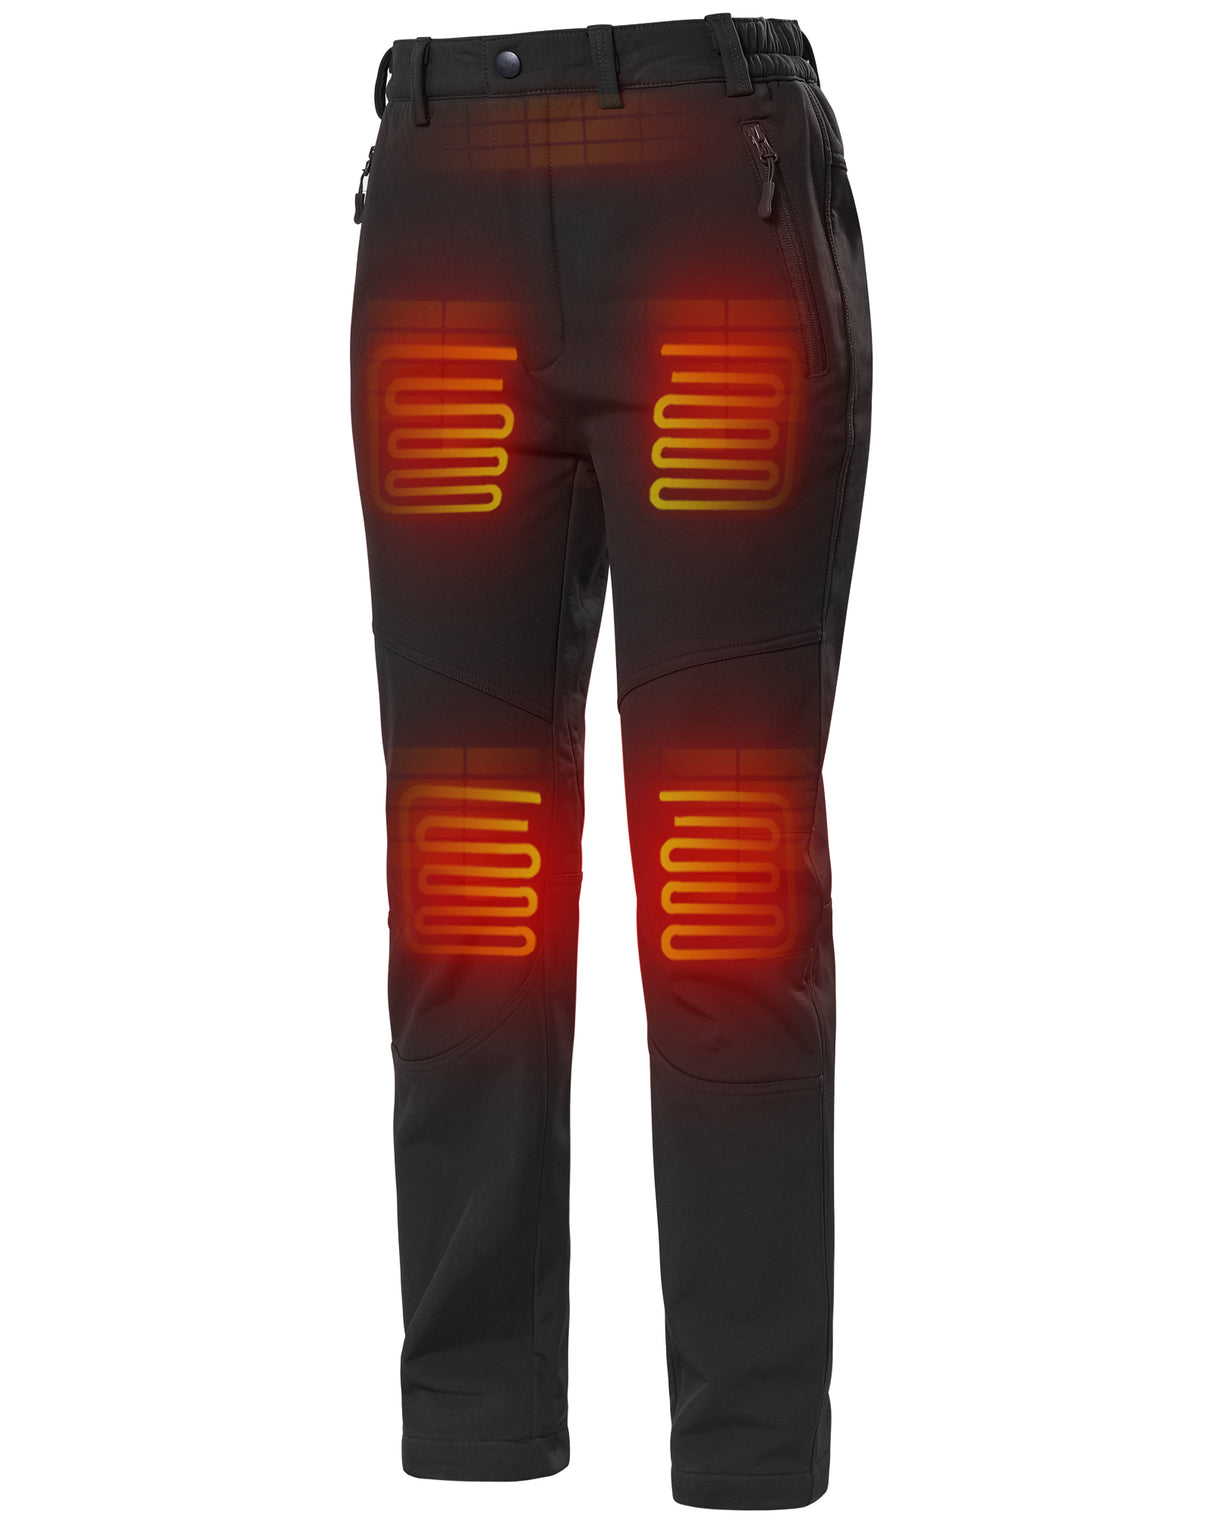 Heated Pants,Usb 5V Heating Pants for Men Women Outdoor Winter